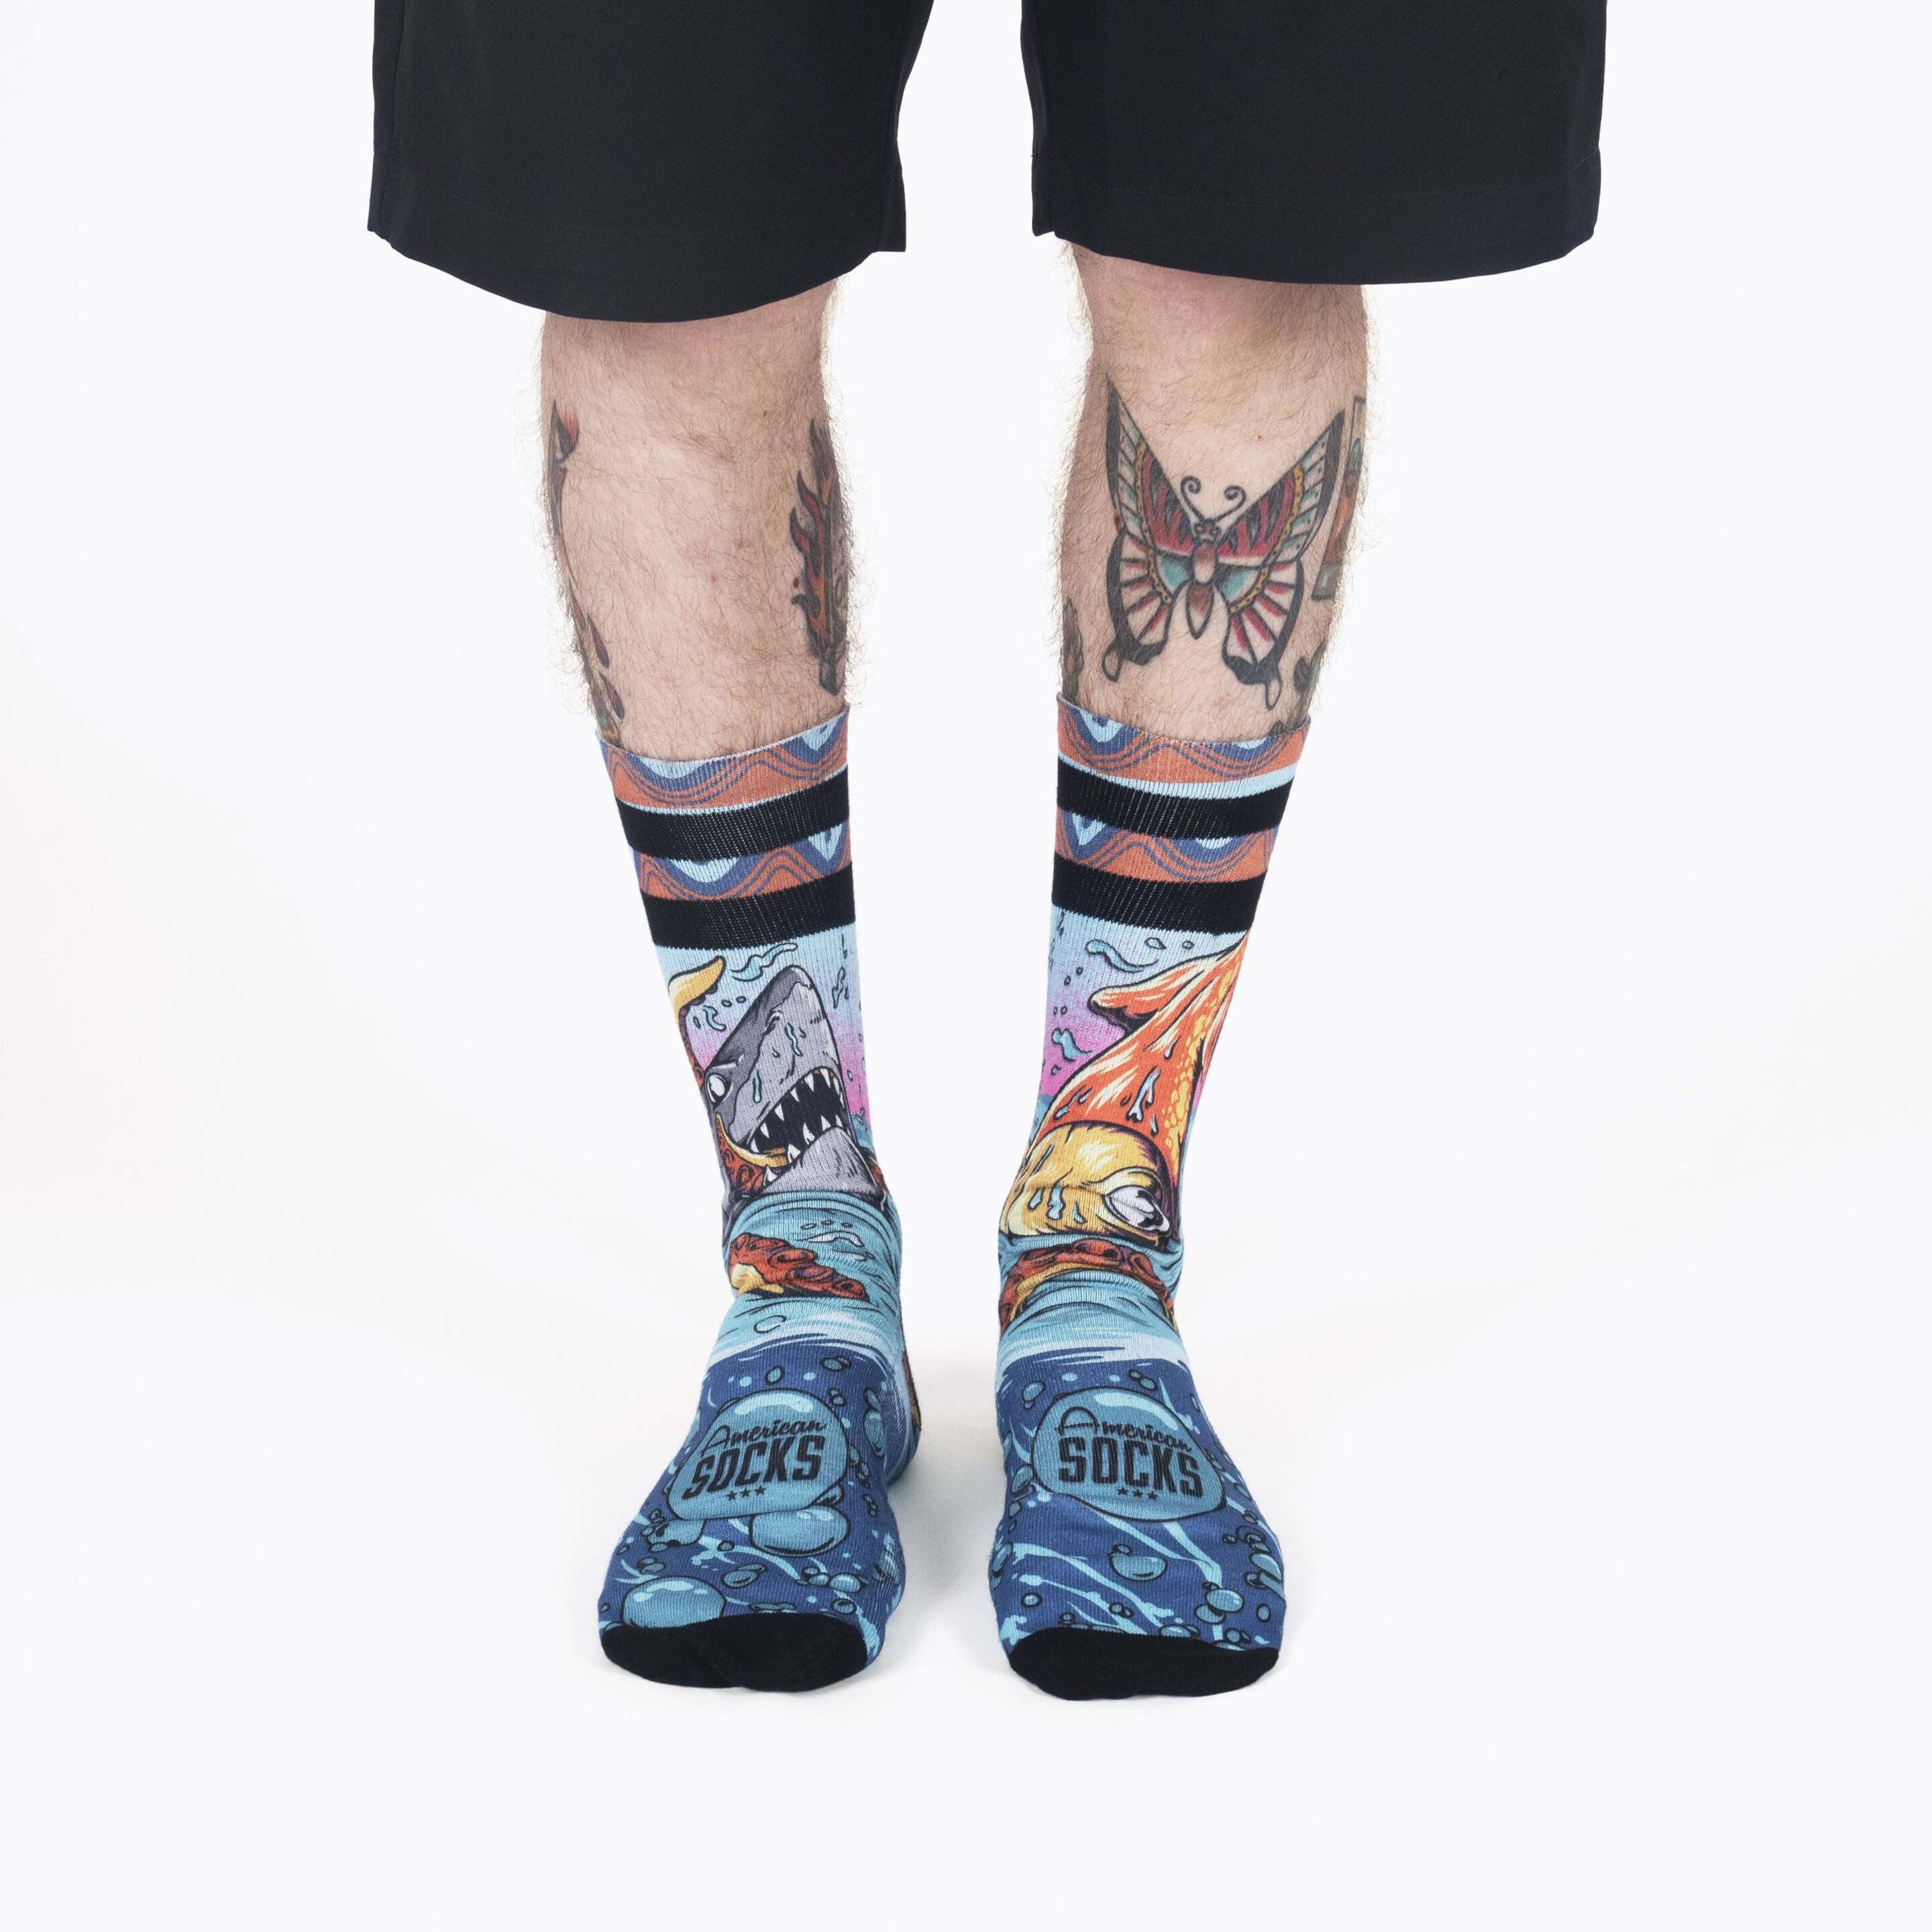 Calcetines American Socks Seamonsters Mid High